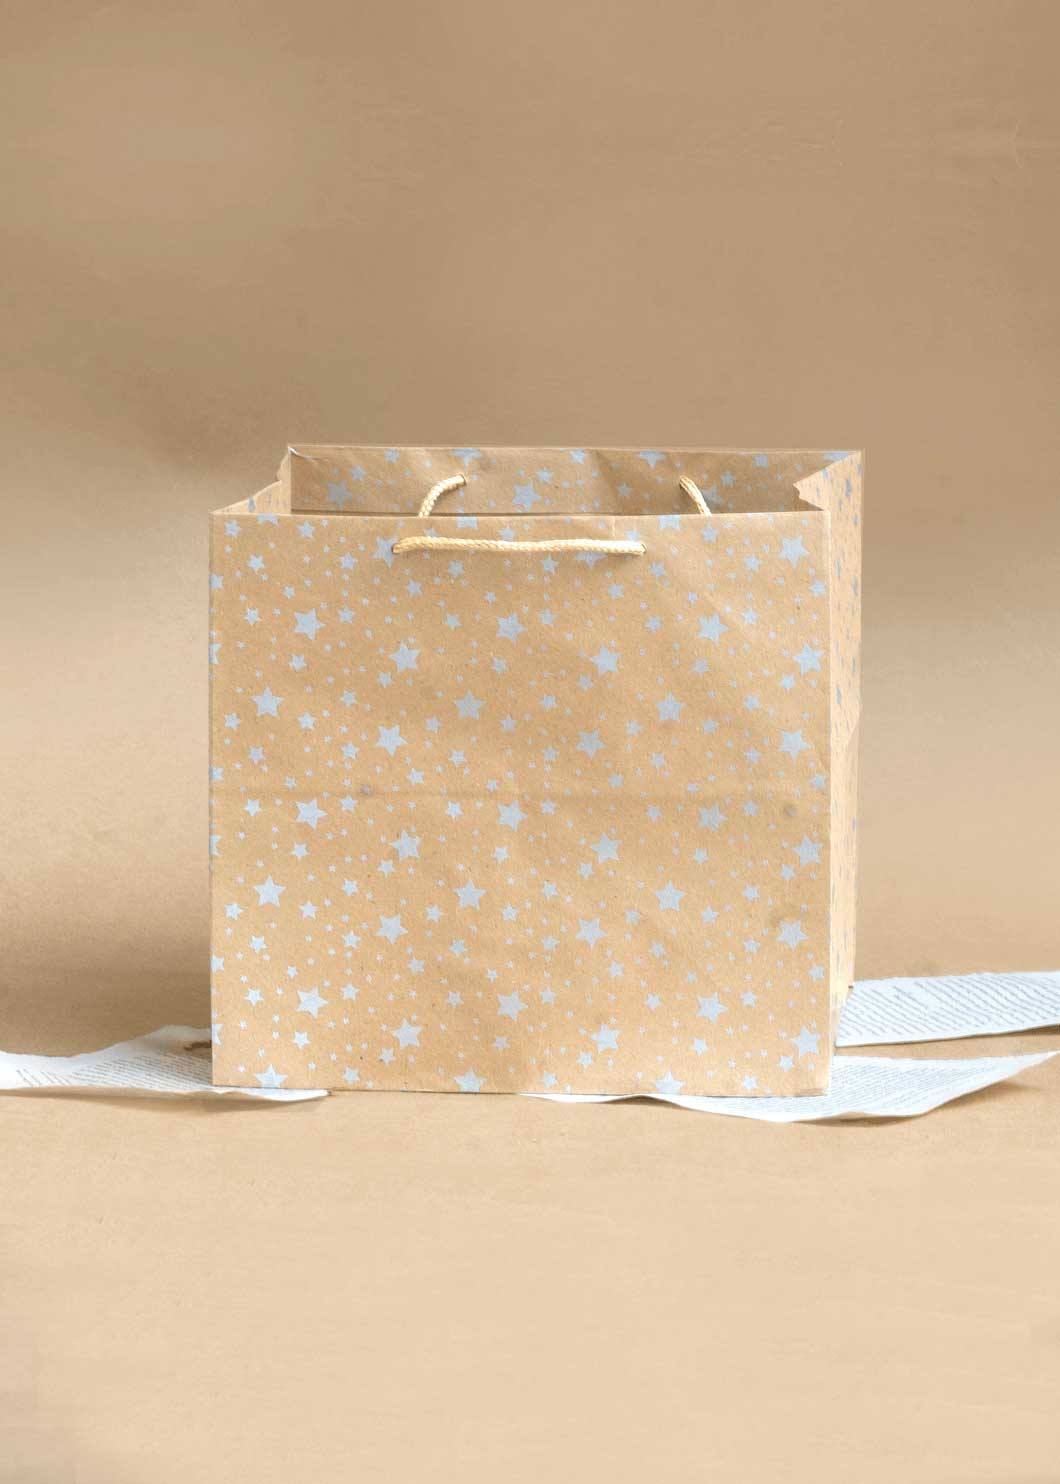 Craft Paper Bag Star Pattern - Craft Bag - Golden Silver Red - 9x9 Paper Bag